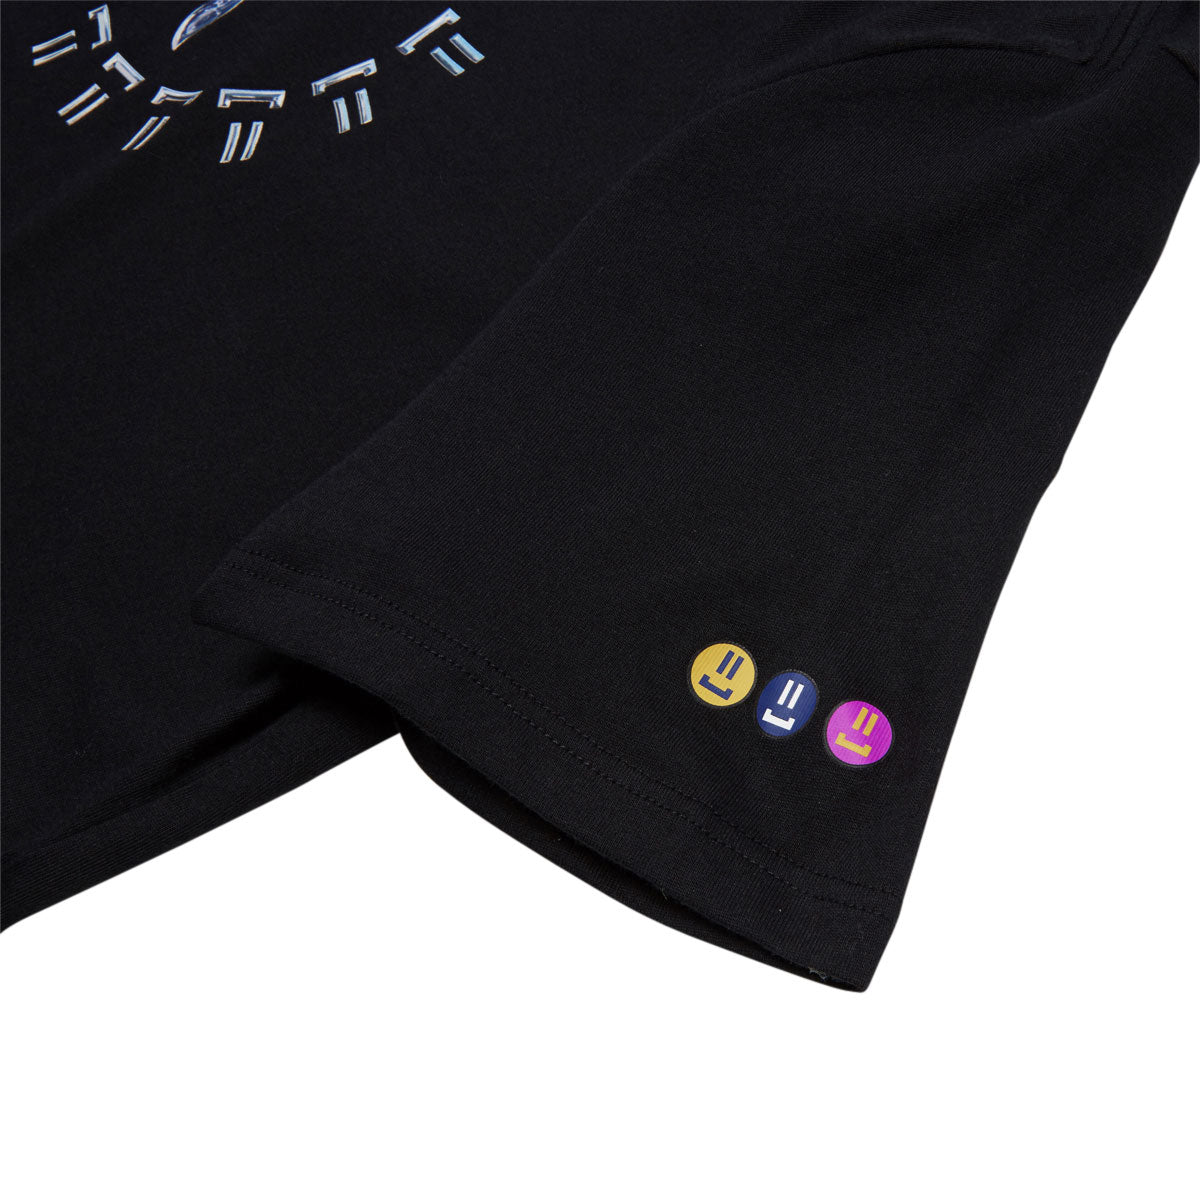 Nike SB Youth x Rayssa Leal T-Shirt - Black image 2